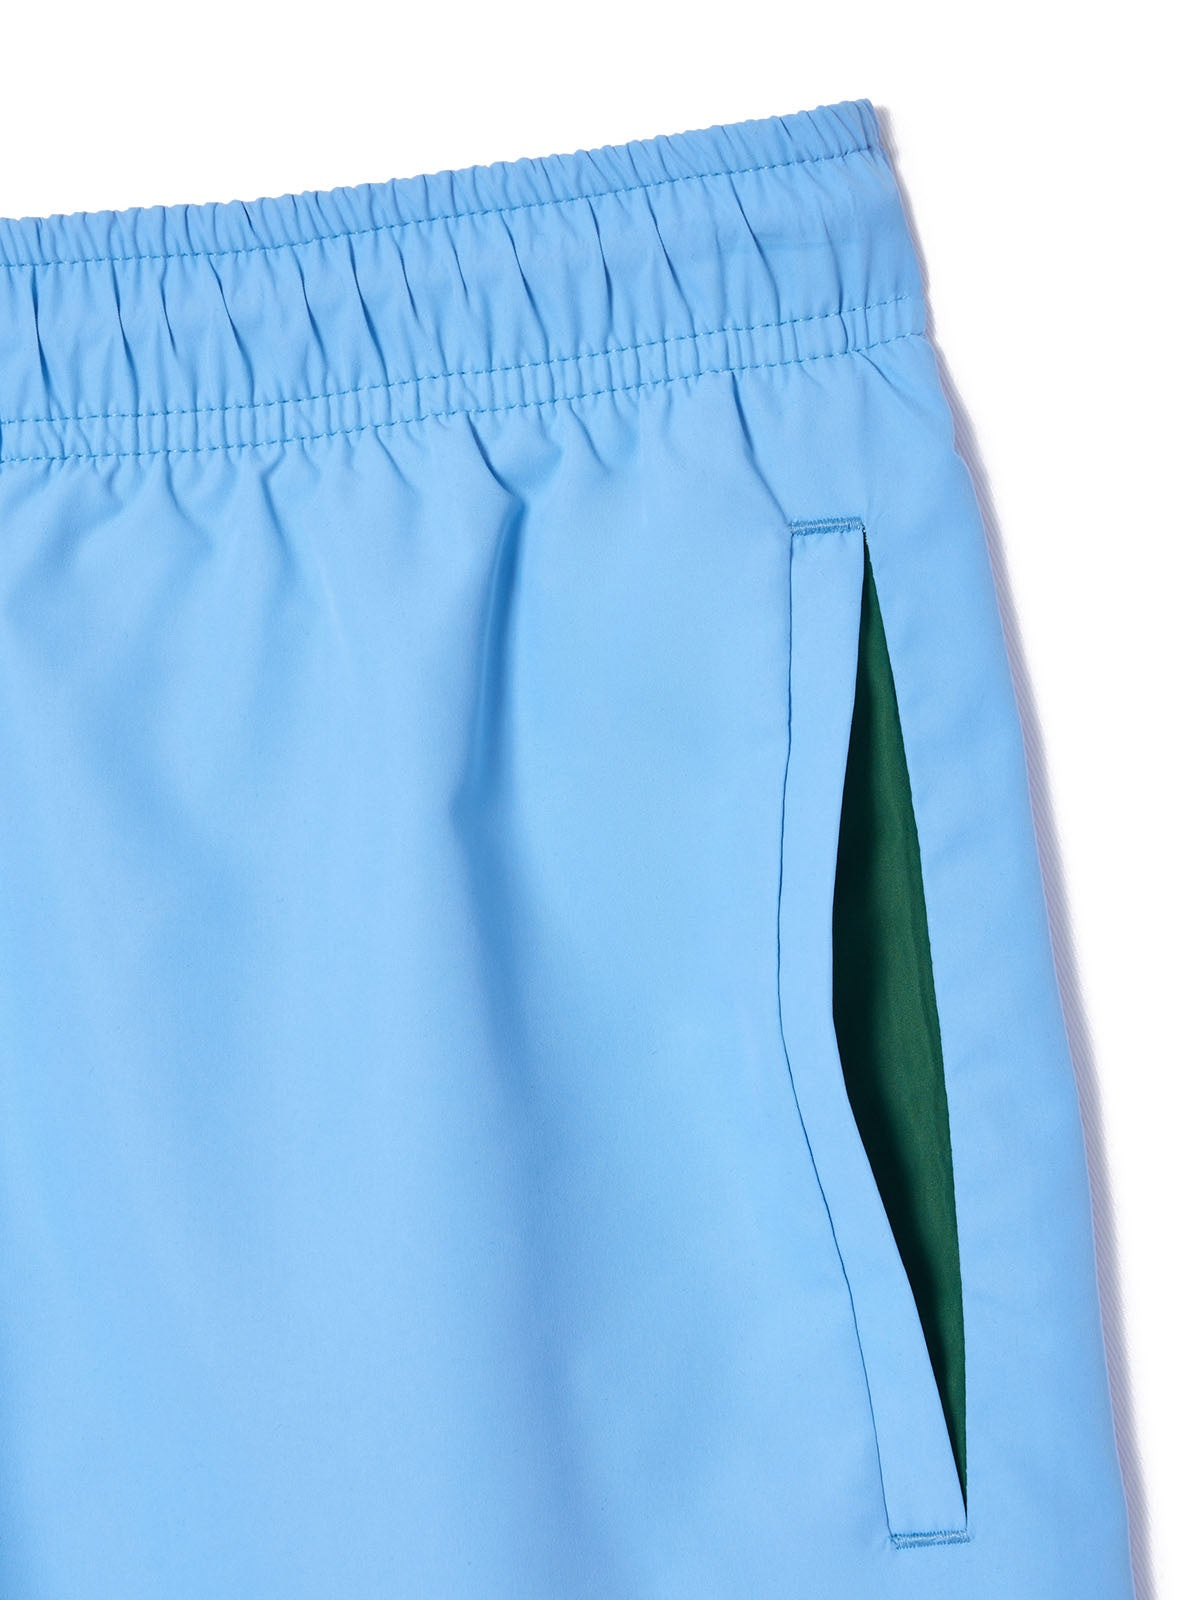 Pantaloncini e calzoncini Uomo Lacoste - Costume Ad Asciugatura Rapida Leggero - Blu